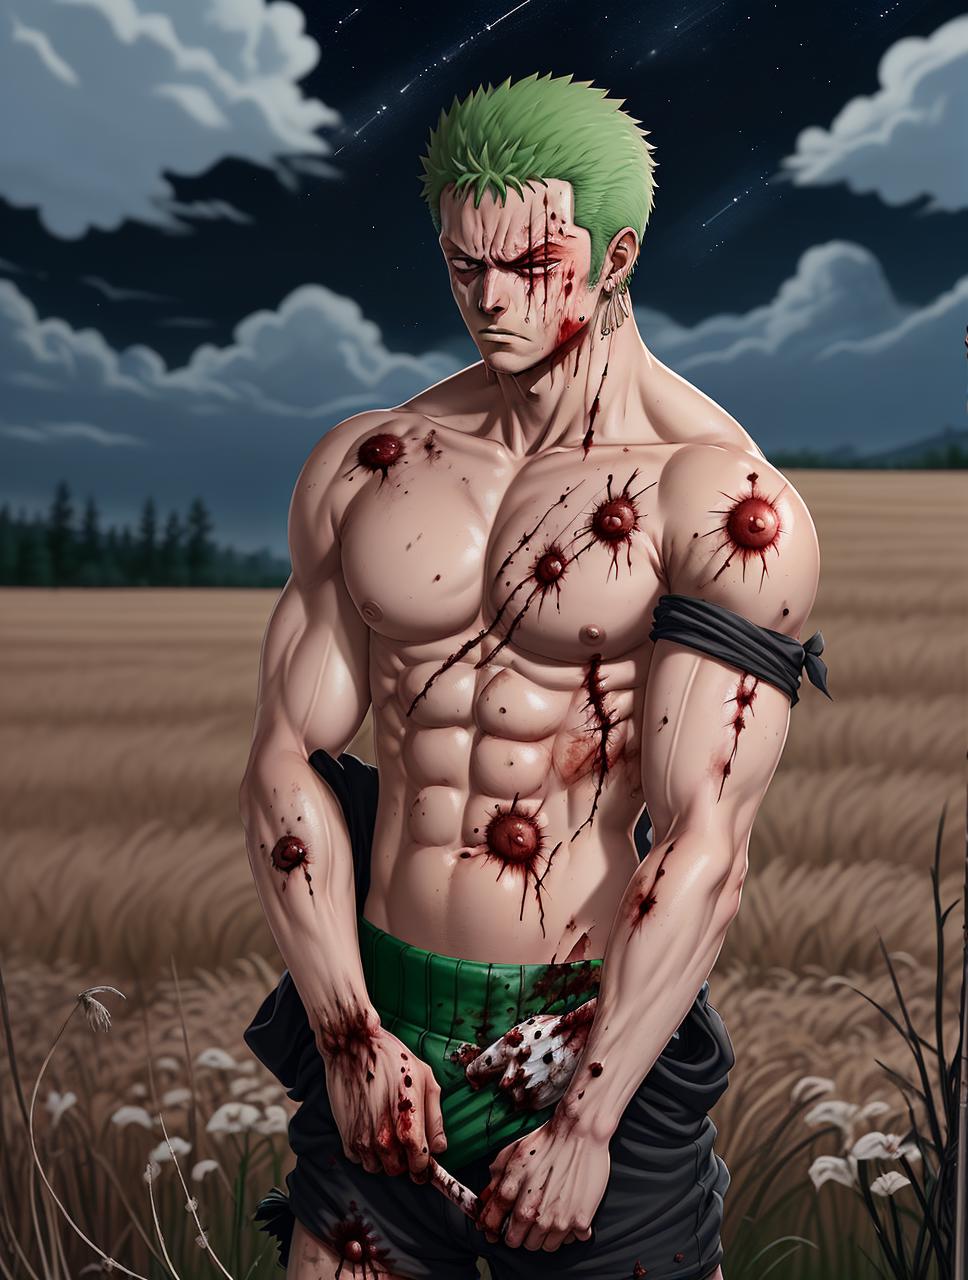 Roronoa Zoro | One Piece image by voidxedis